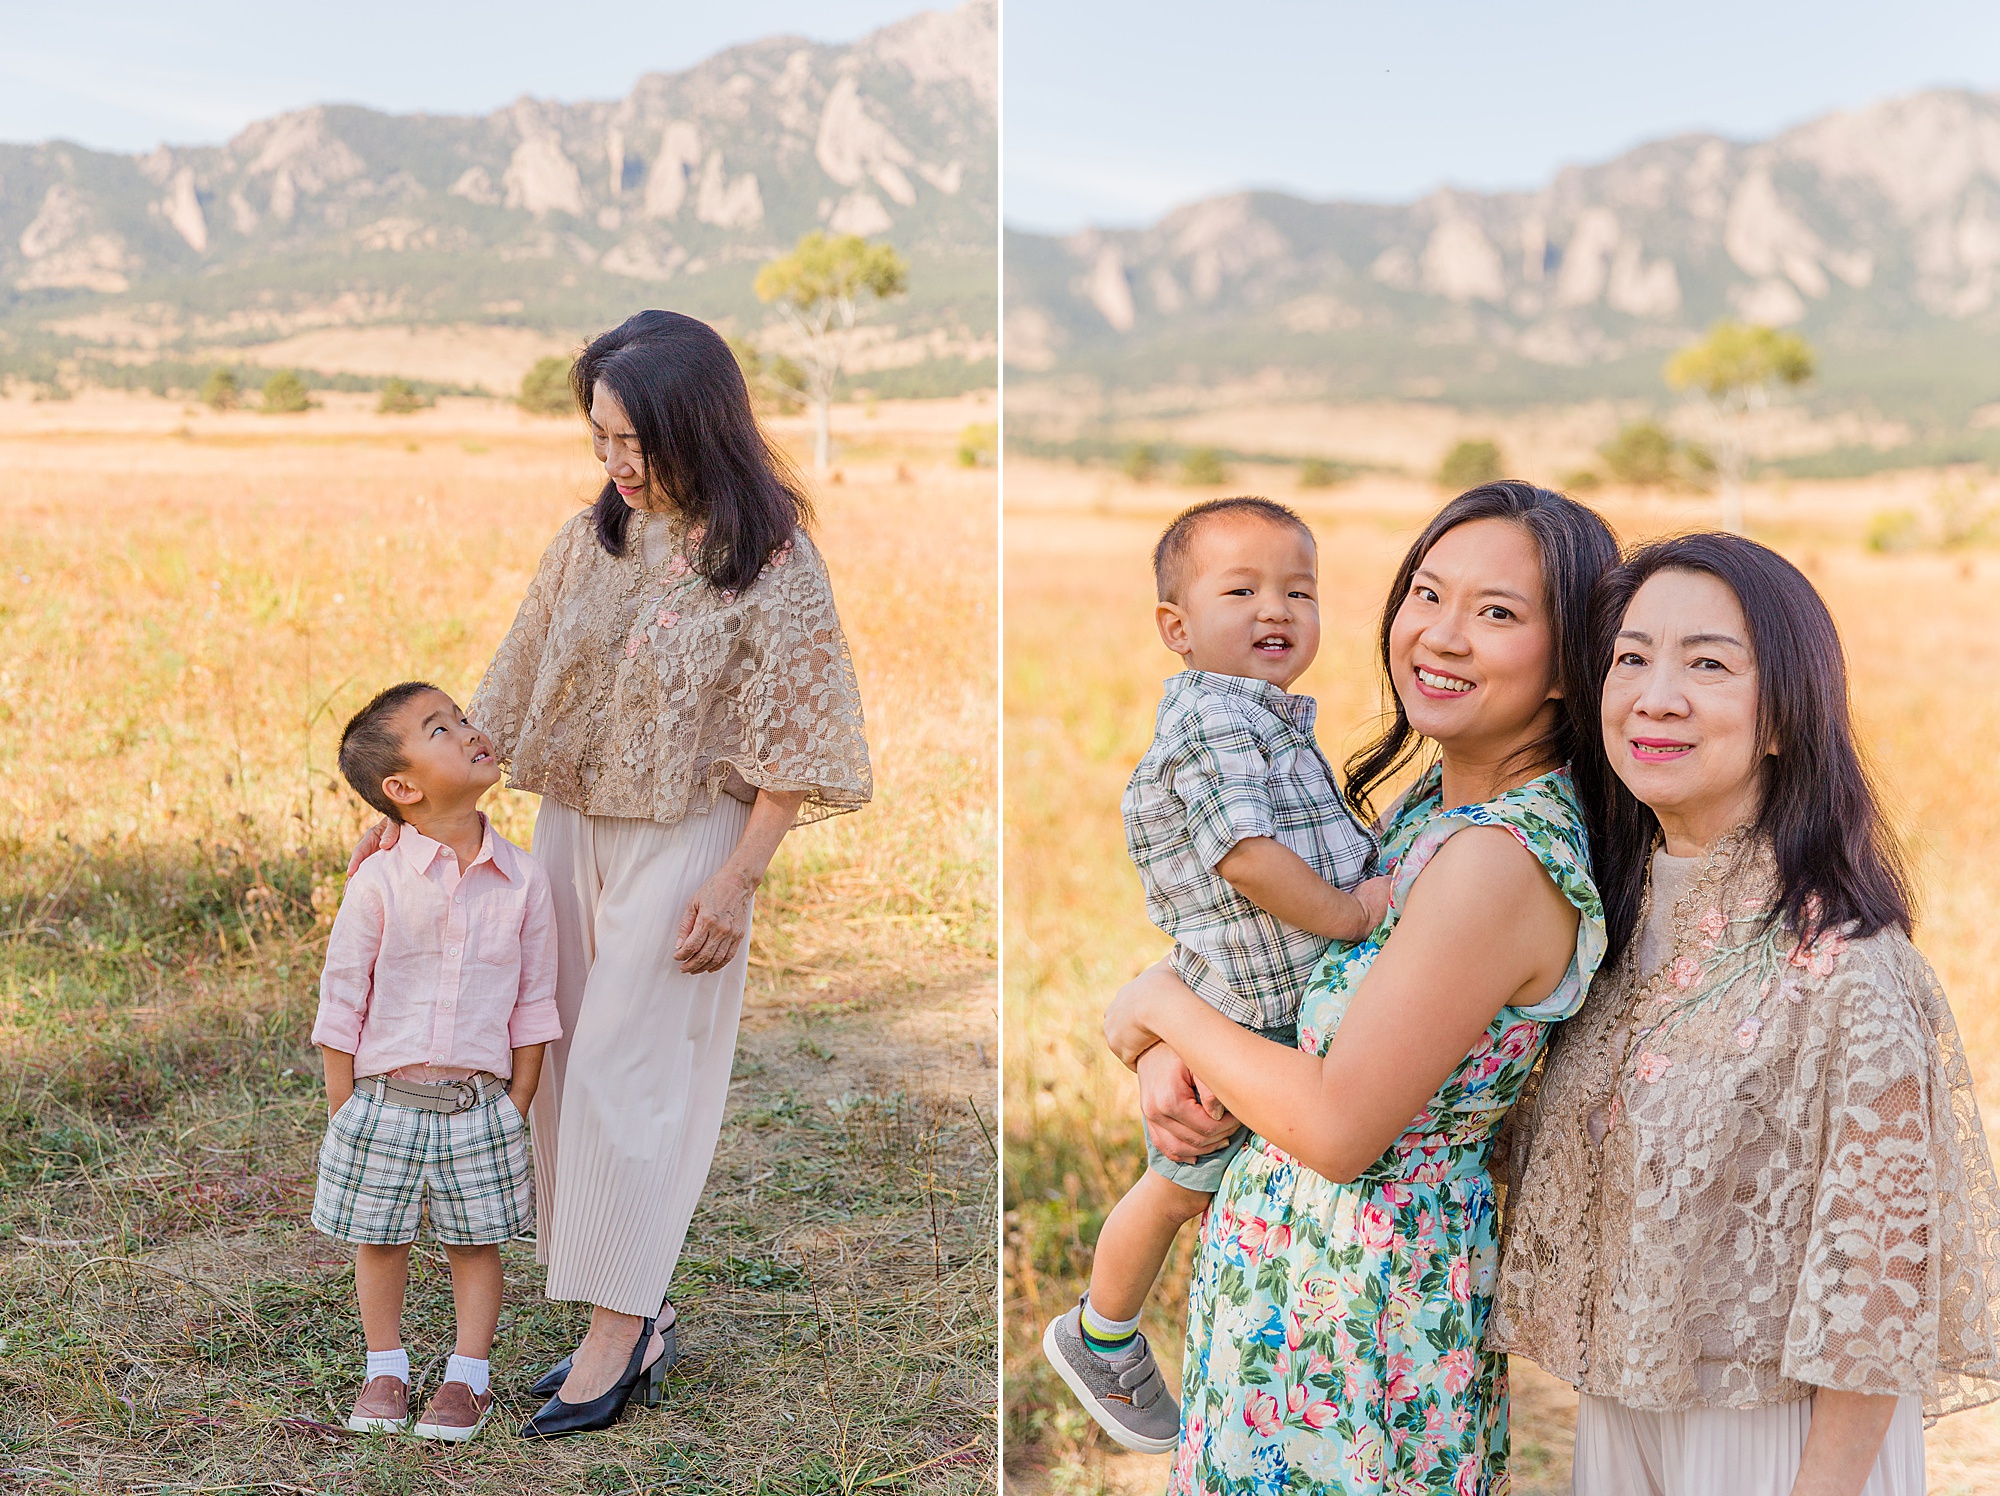 Boulder CO family photographer captures 3 generations together